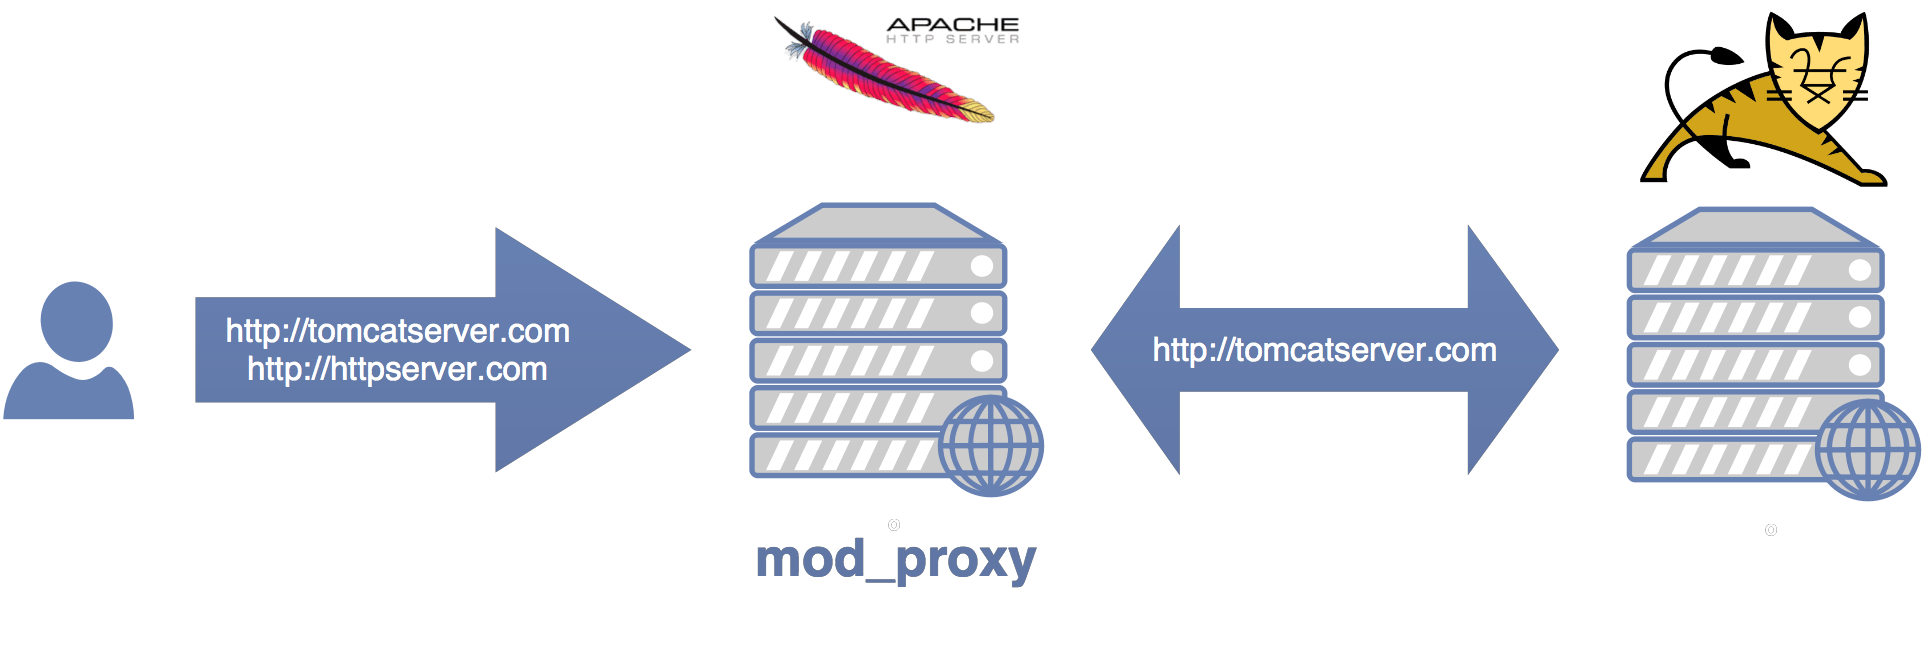 Apache Tomcat - Apache HTTPd - mod_proxy front-end